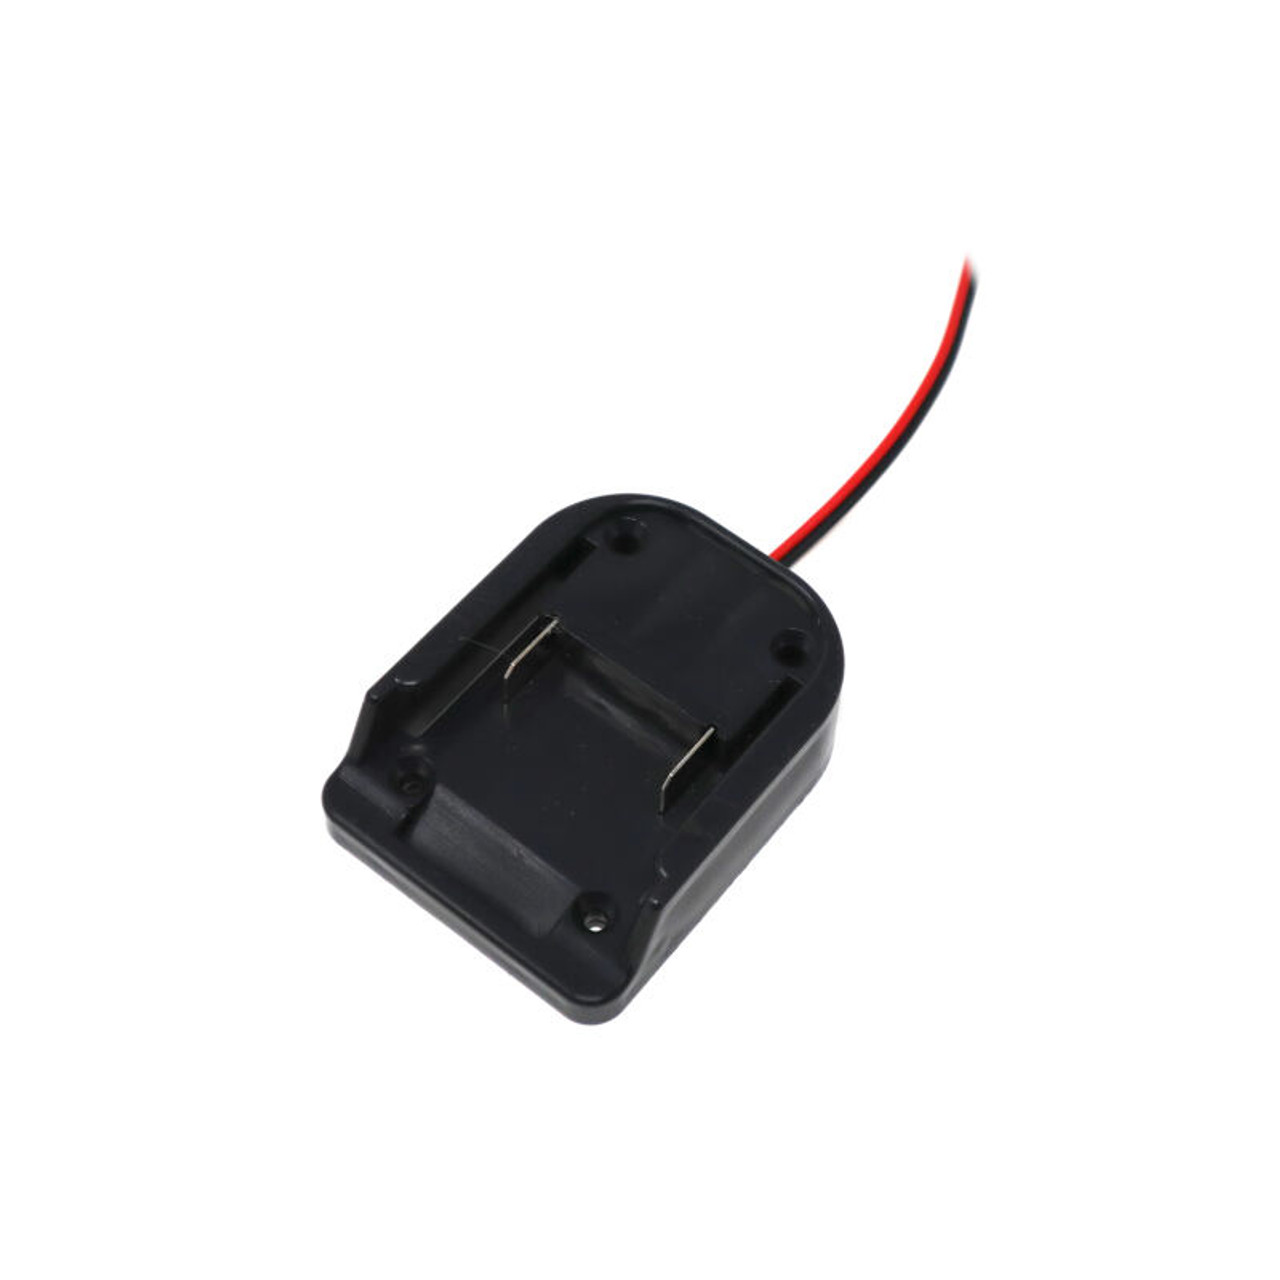 Adapter socket / connector for Black&Decker 18V battery pack